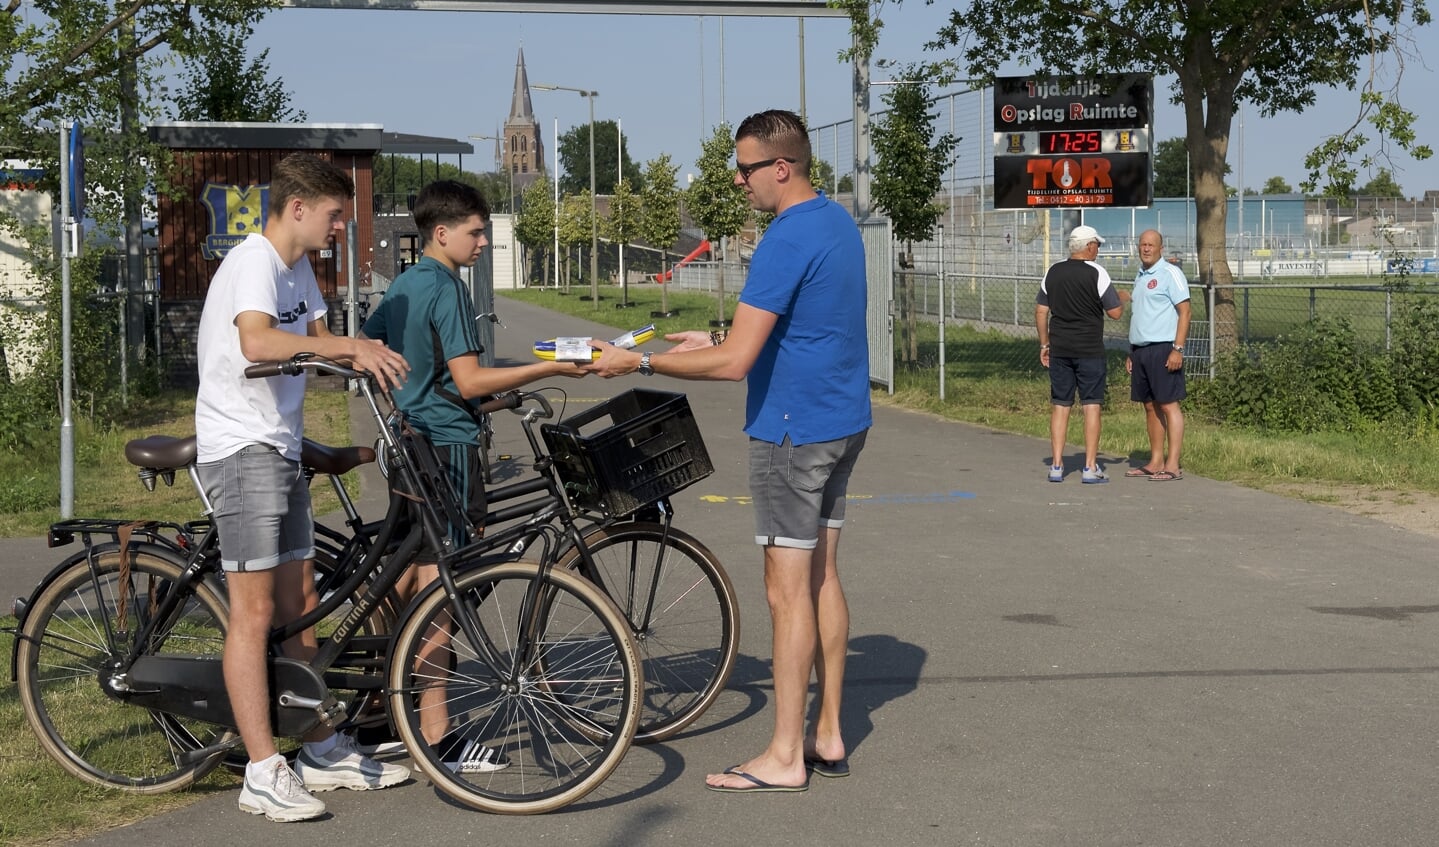 'Drive-thru bedanksessie' voor vrijwilligers Berghem Sport. (Foto: Ad Megens)